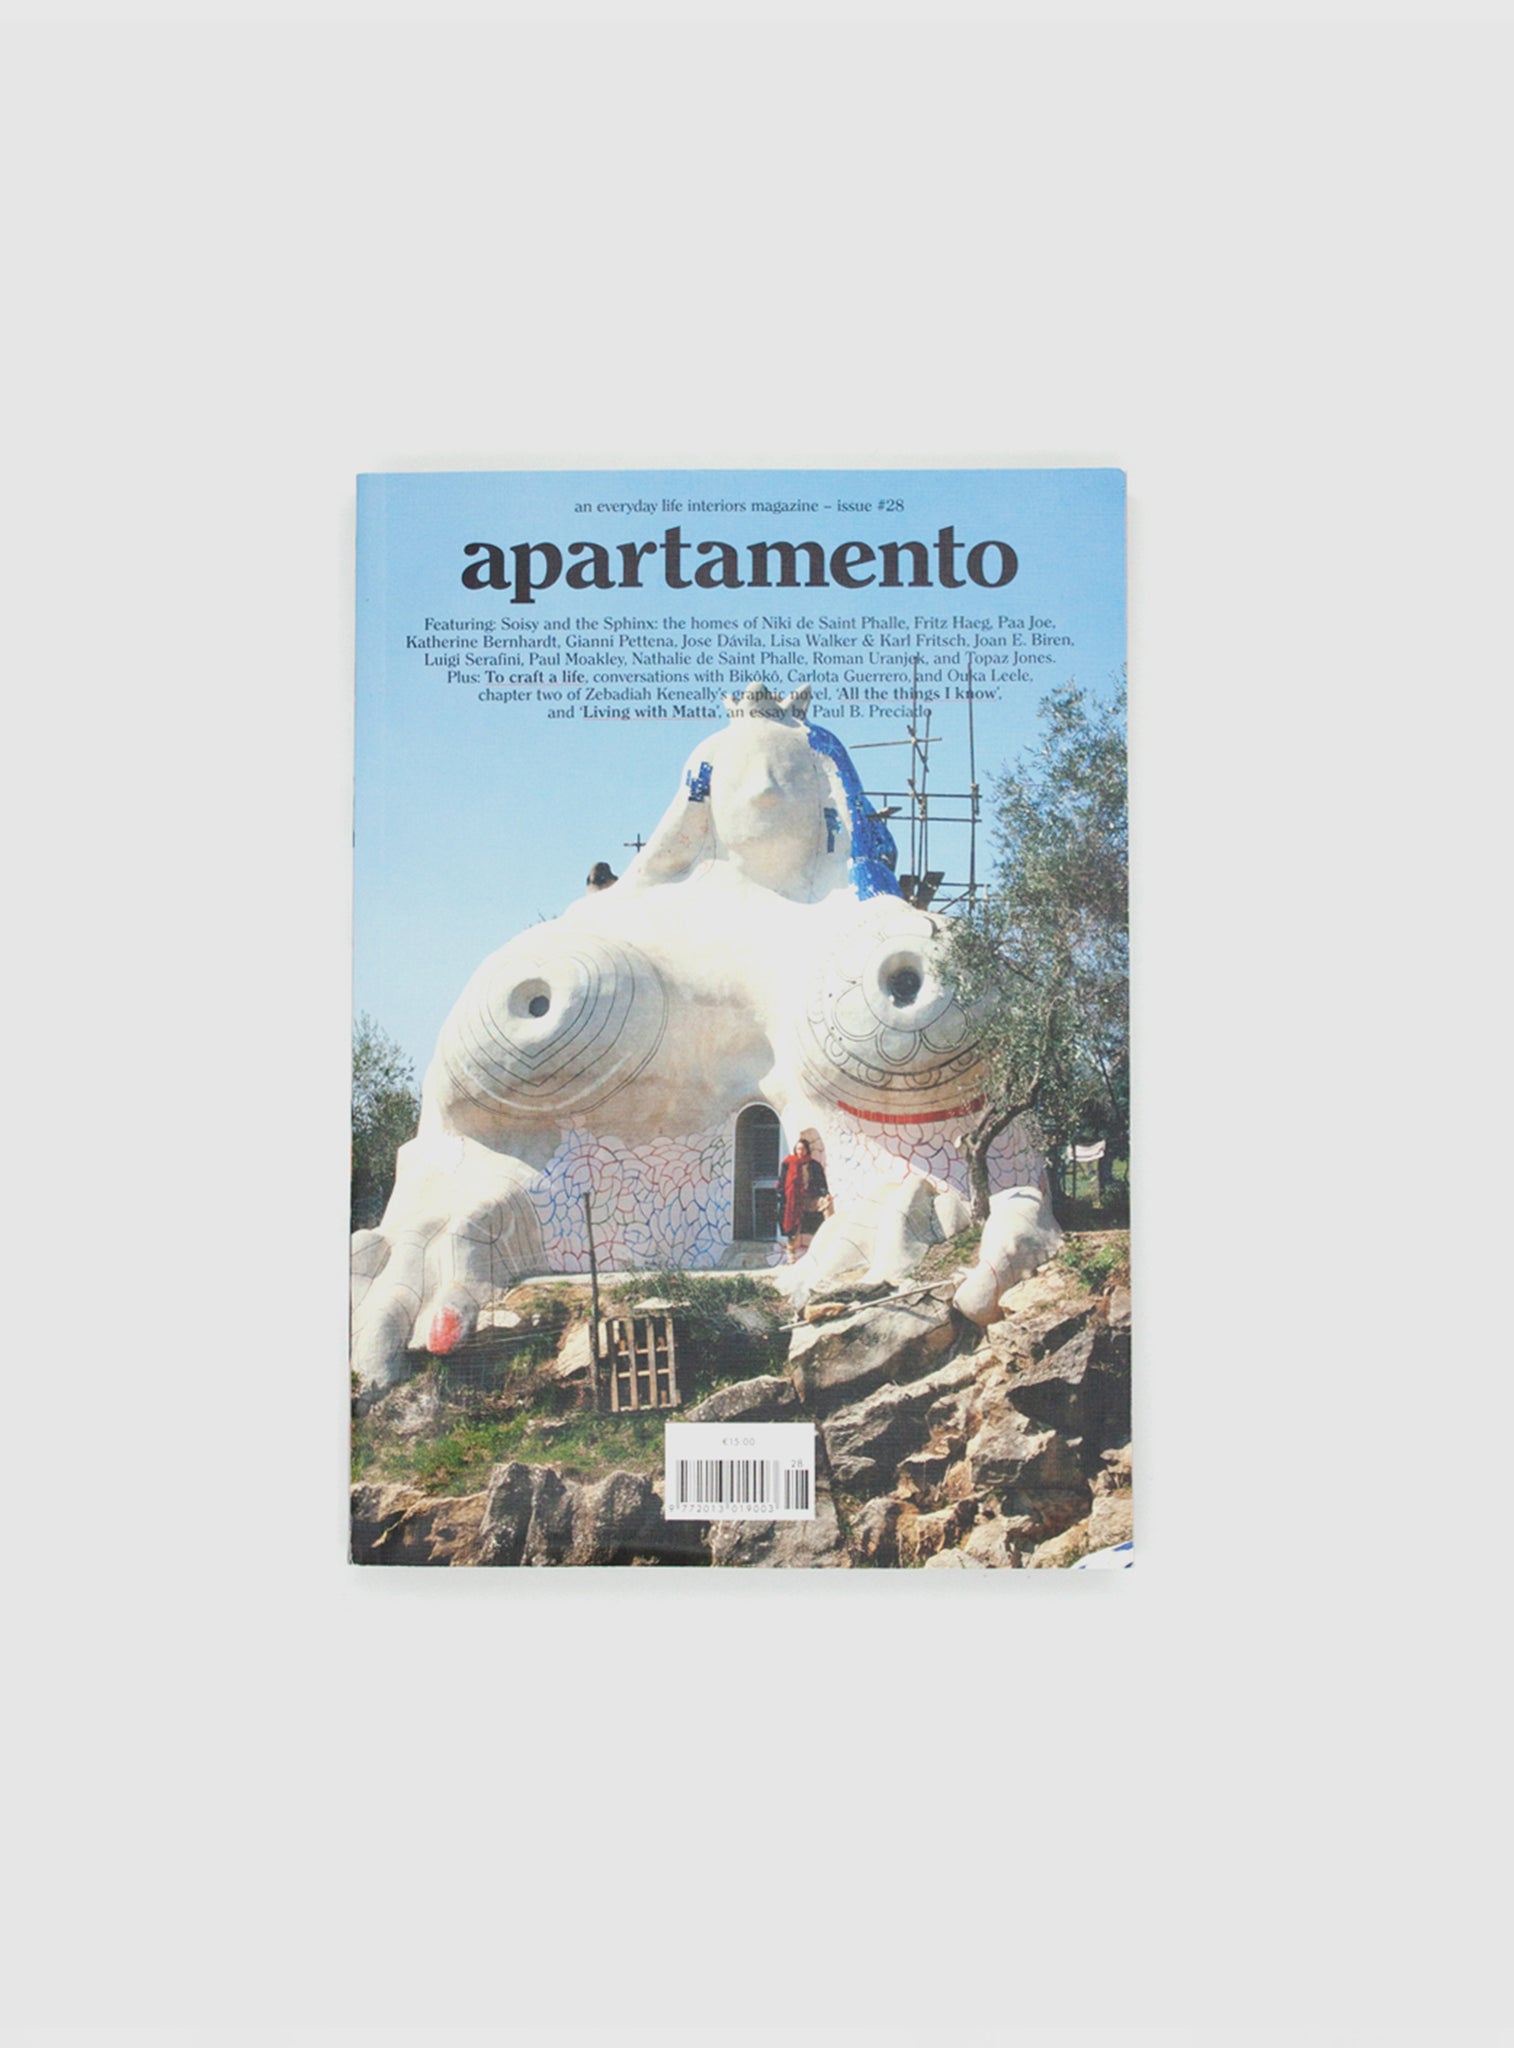 Apartamento Magazine #28